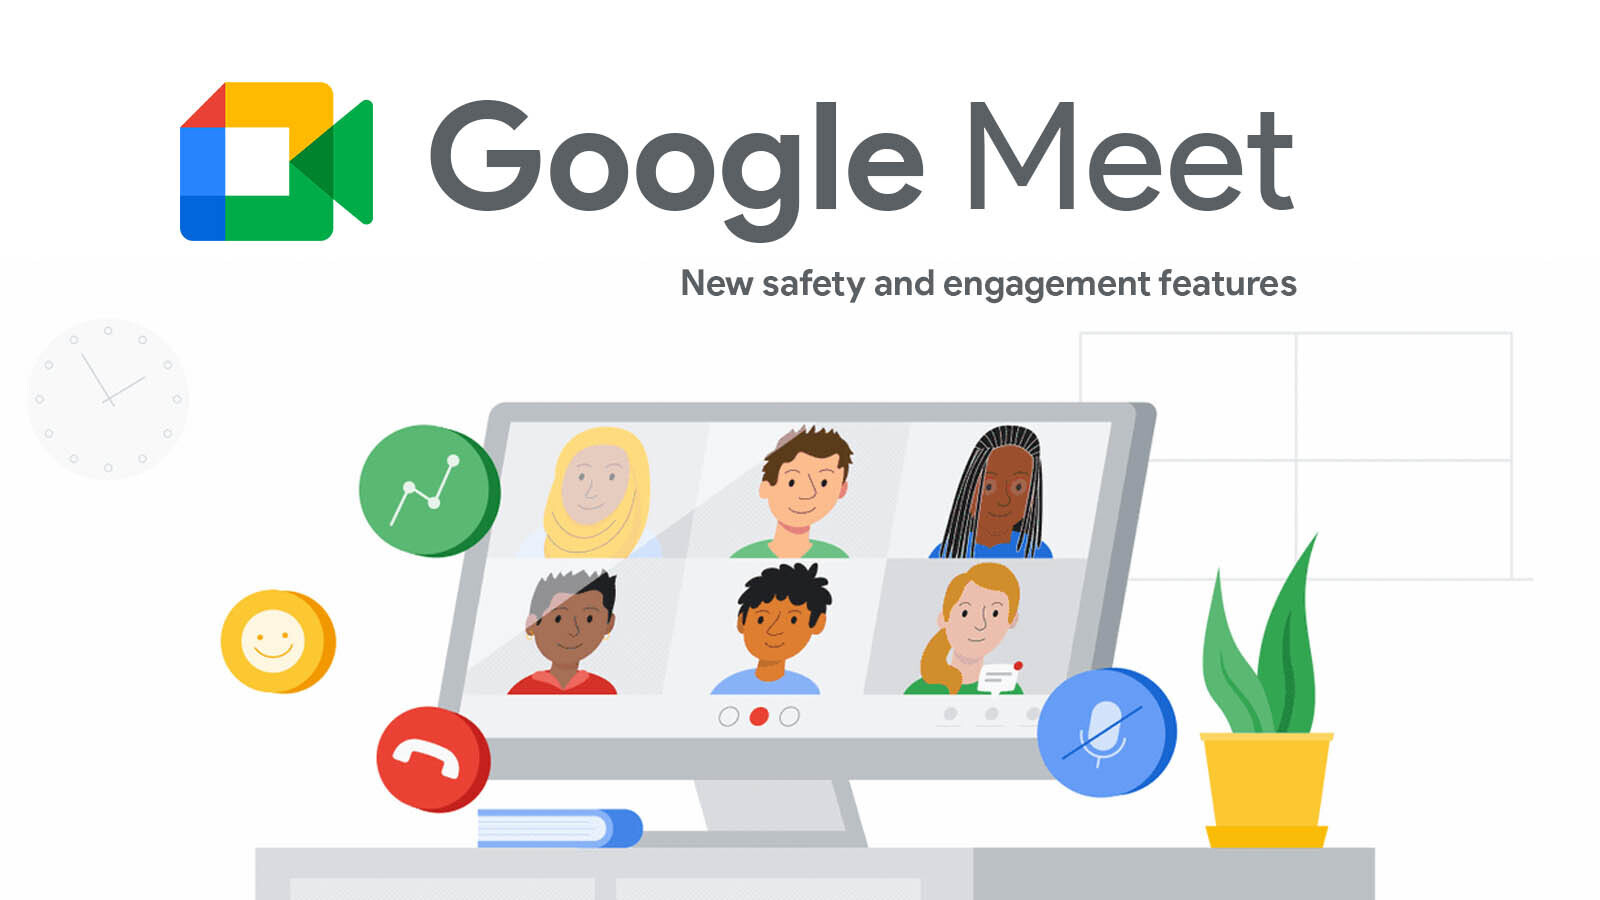 Tổng hợp Background Google Meet đẹp nhất